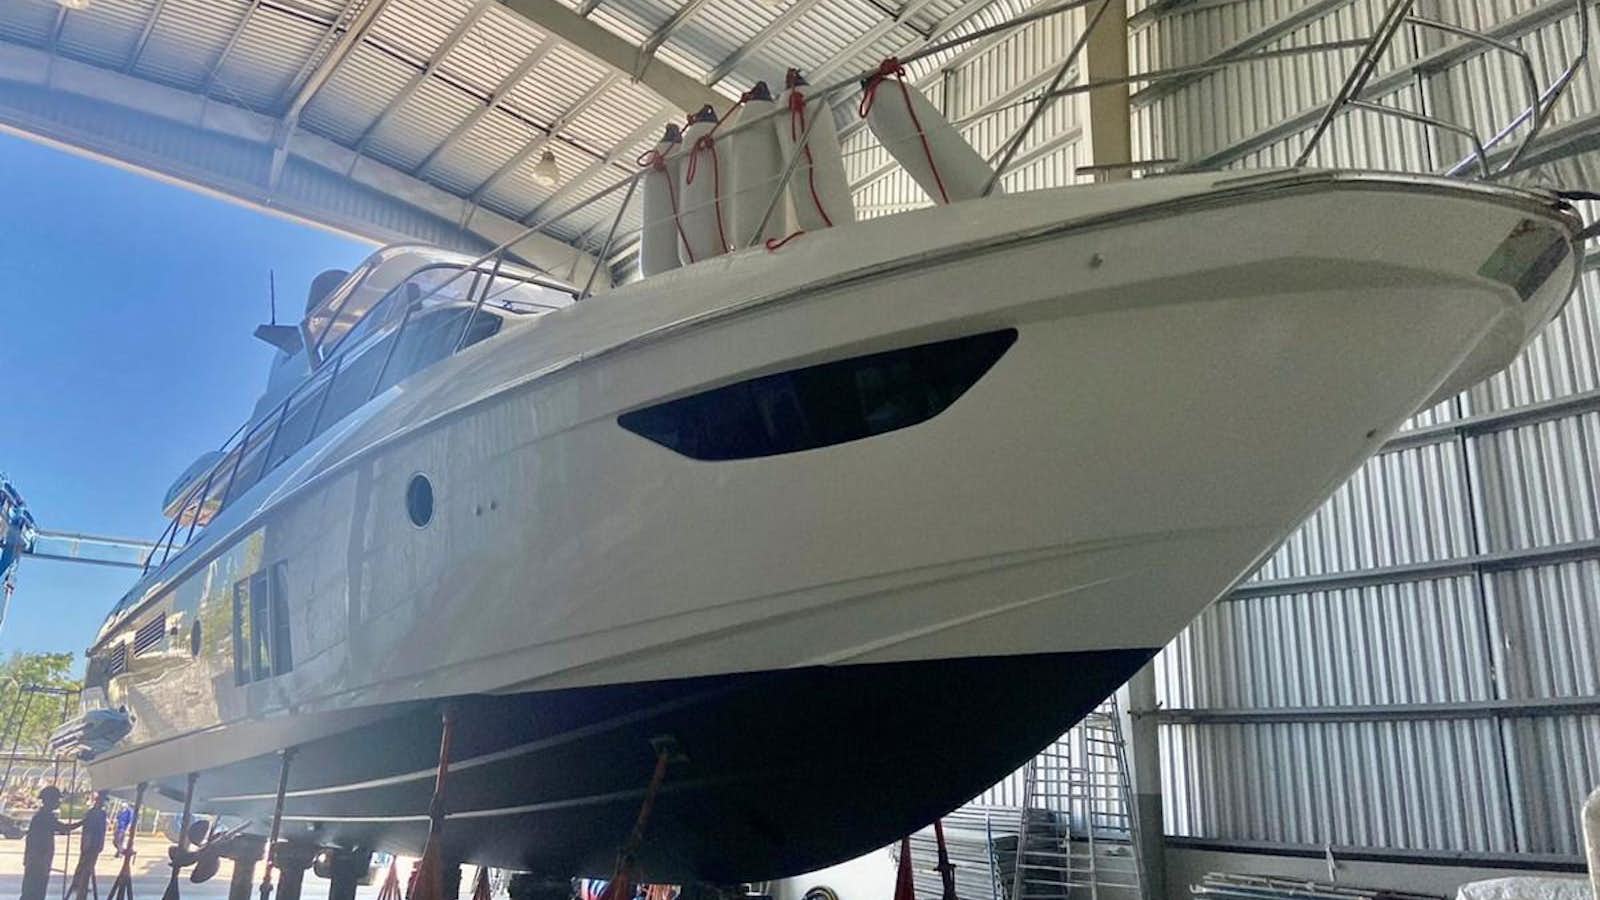 Azimut 58 flybridge
Yacht for Sale